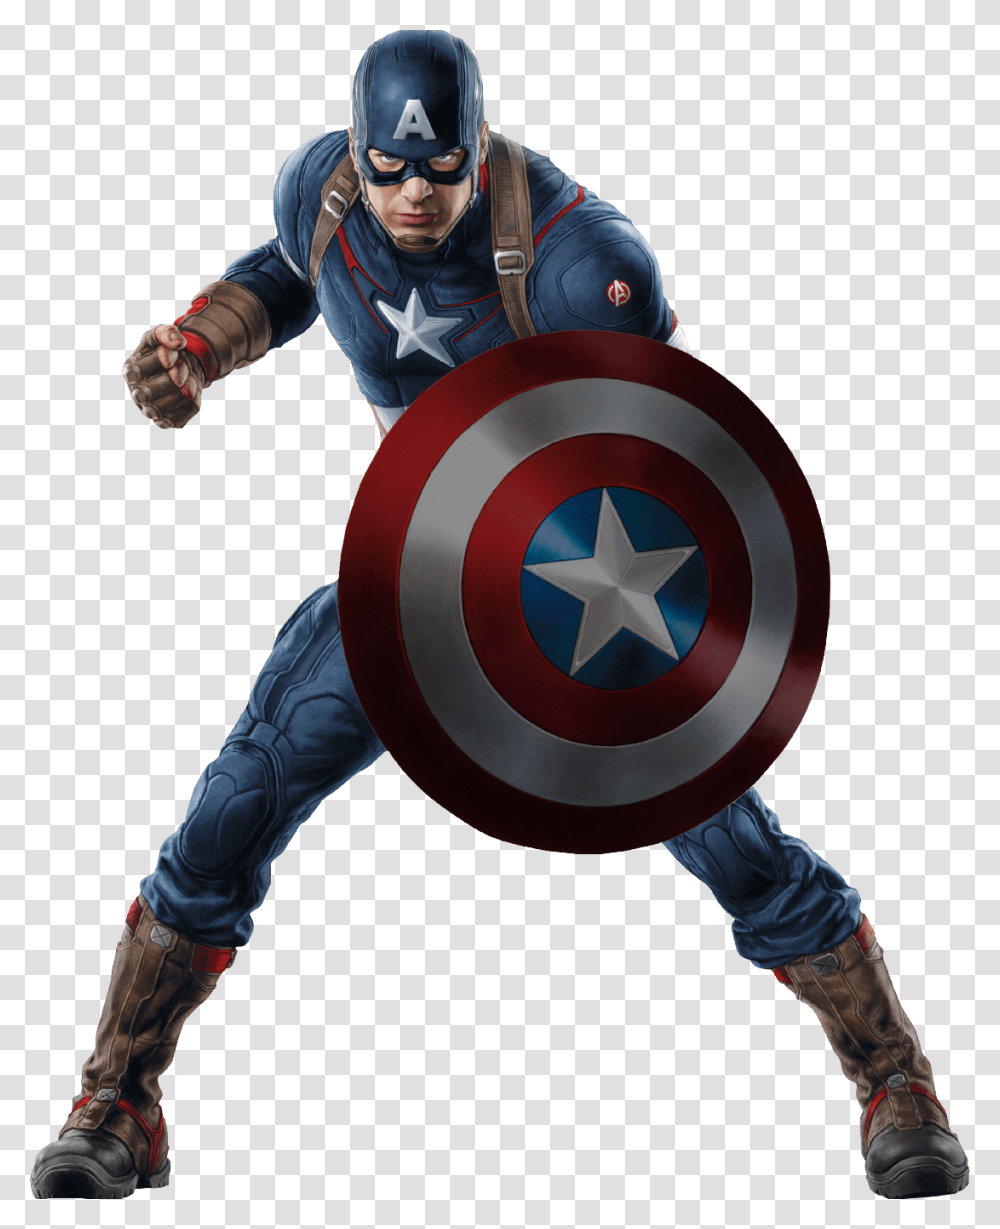 Captain Captain America With Shield, Armor, Person, Human, Helmet Transparent Png